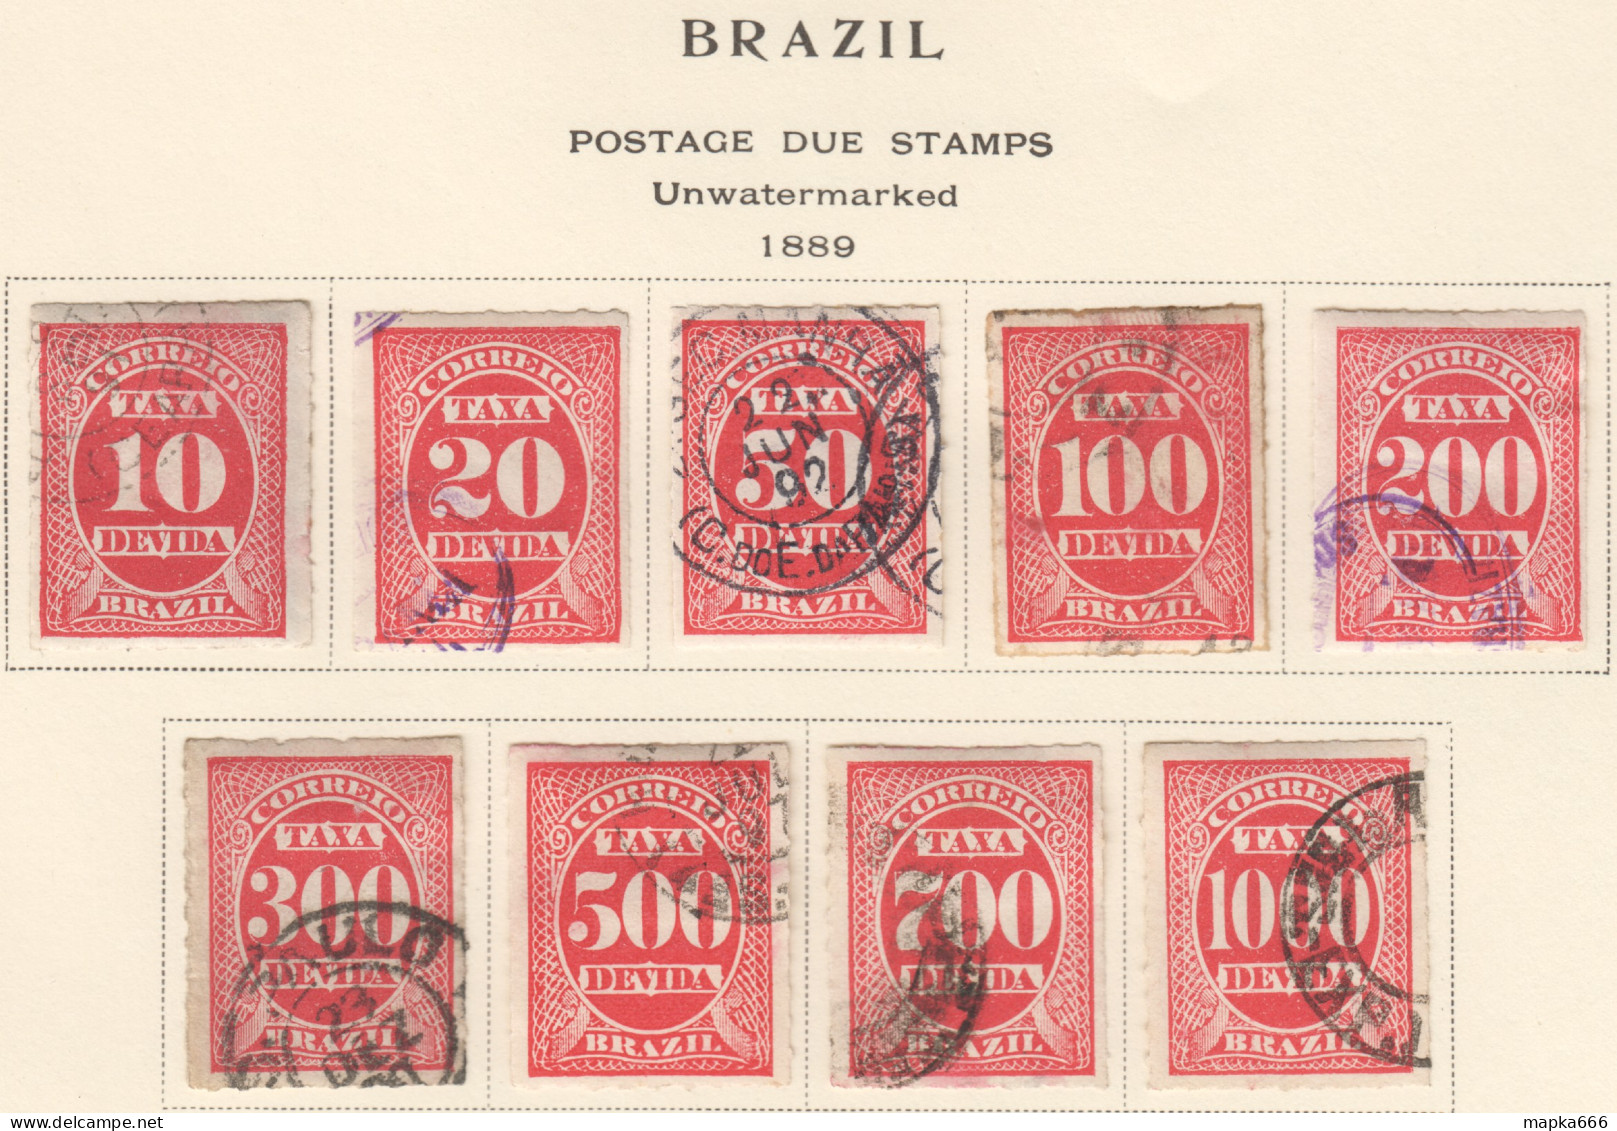 Bra184 1889 Brazil Postage Due Stamps Michel #1-9 85 Euro 1Set Used - Portomarken